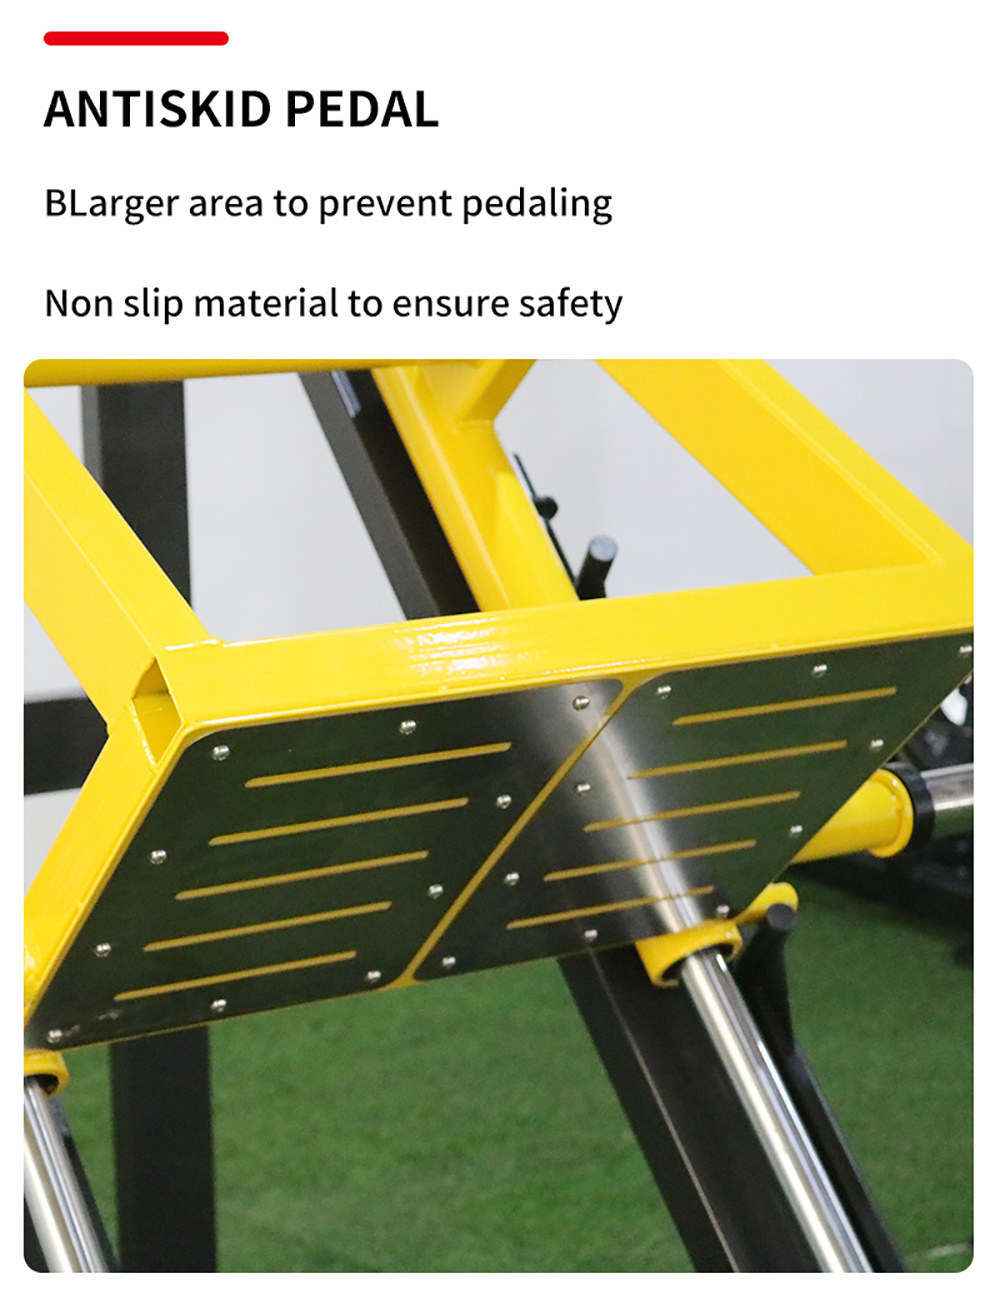 Selectorized Pin Loaded Gym Fitness Equipment Leg Press Machine